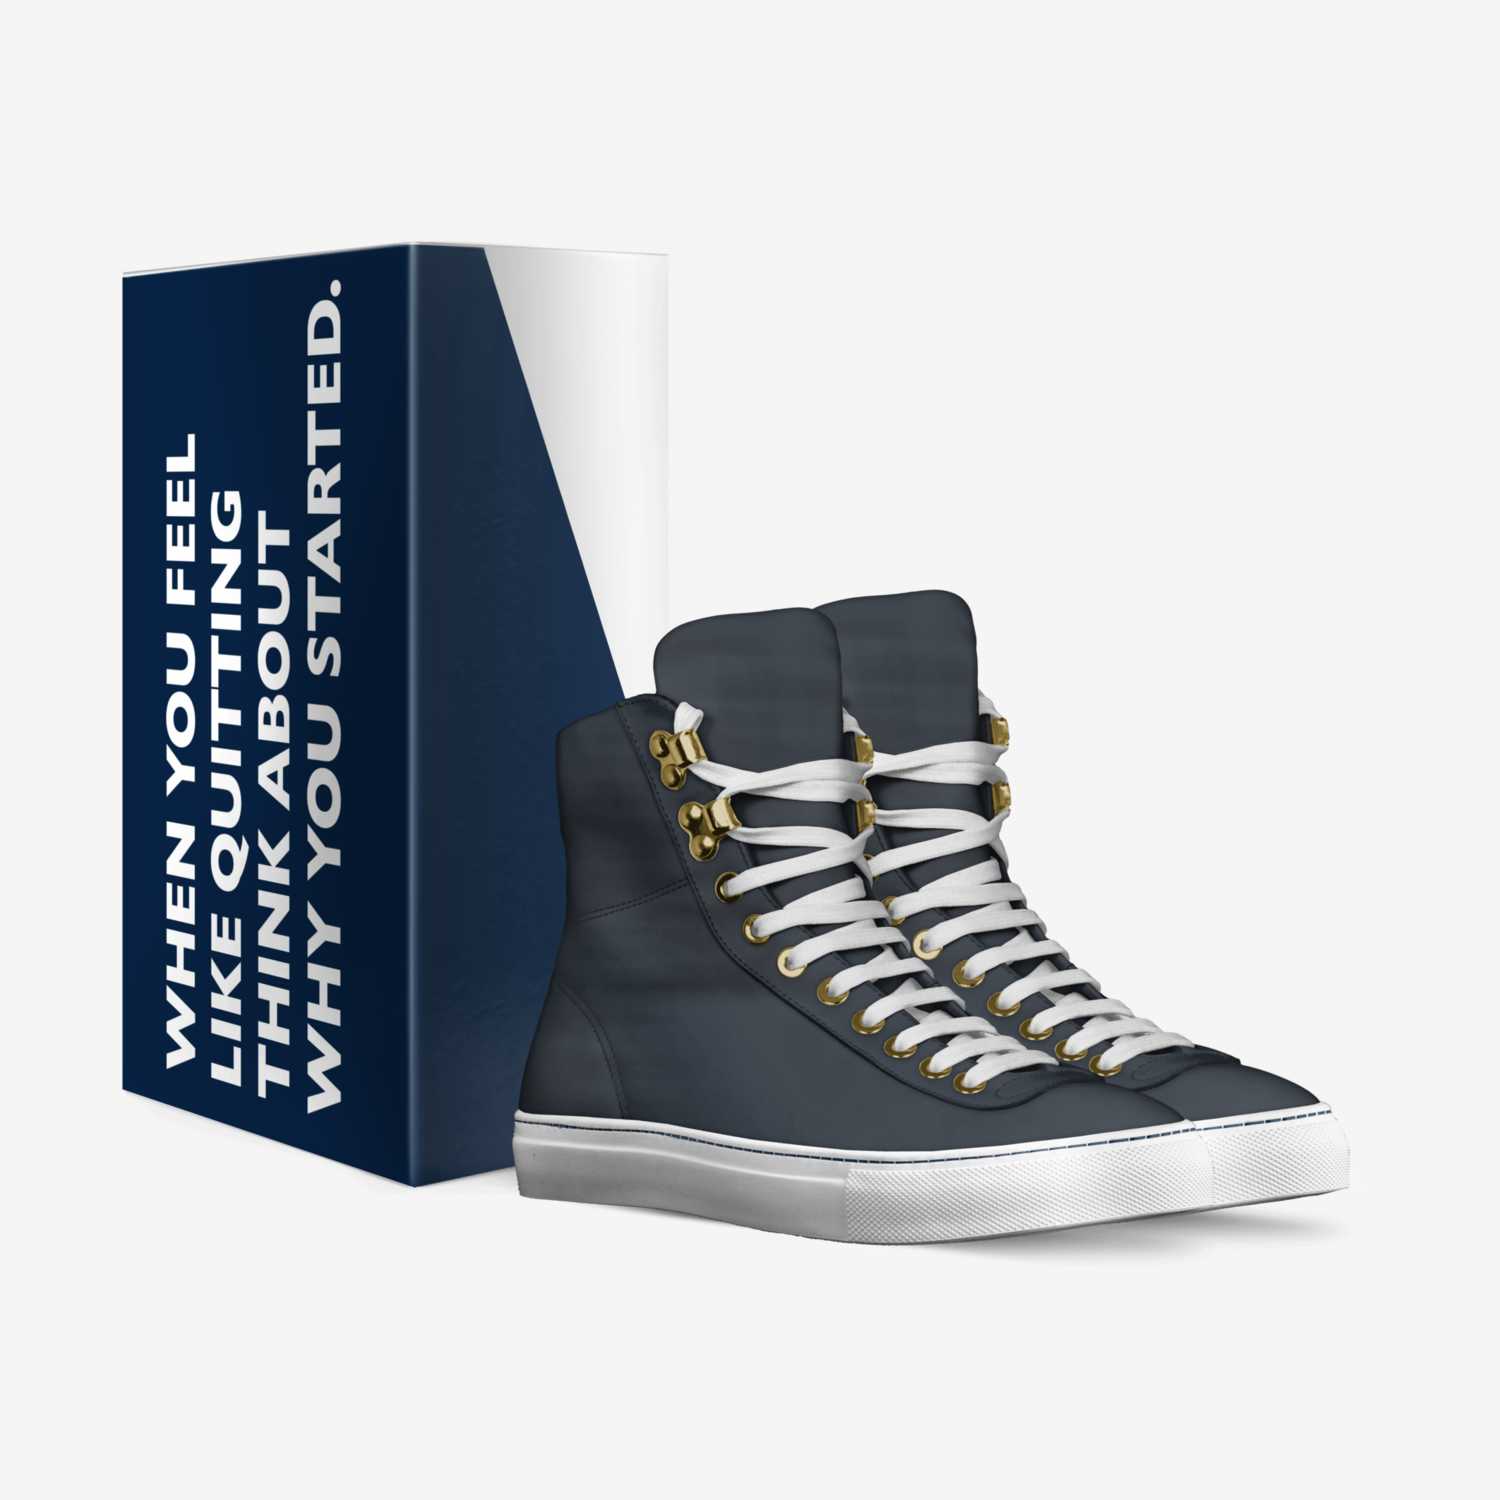 MOTIV8 custom made in Italy shoes by Benjamin Reid | Box view